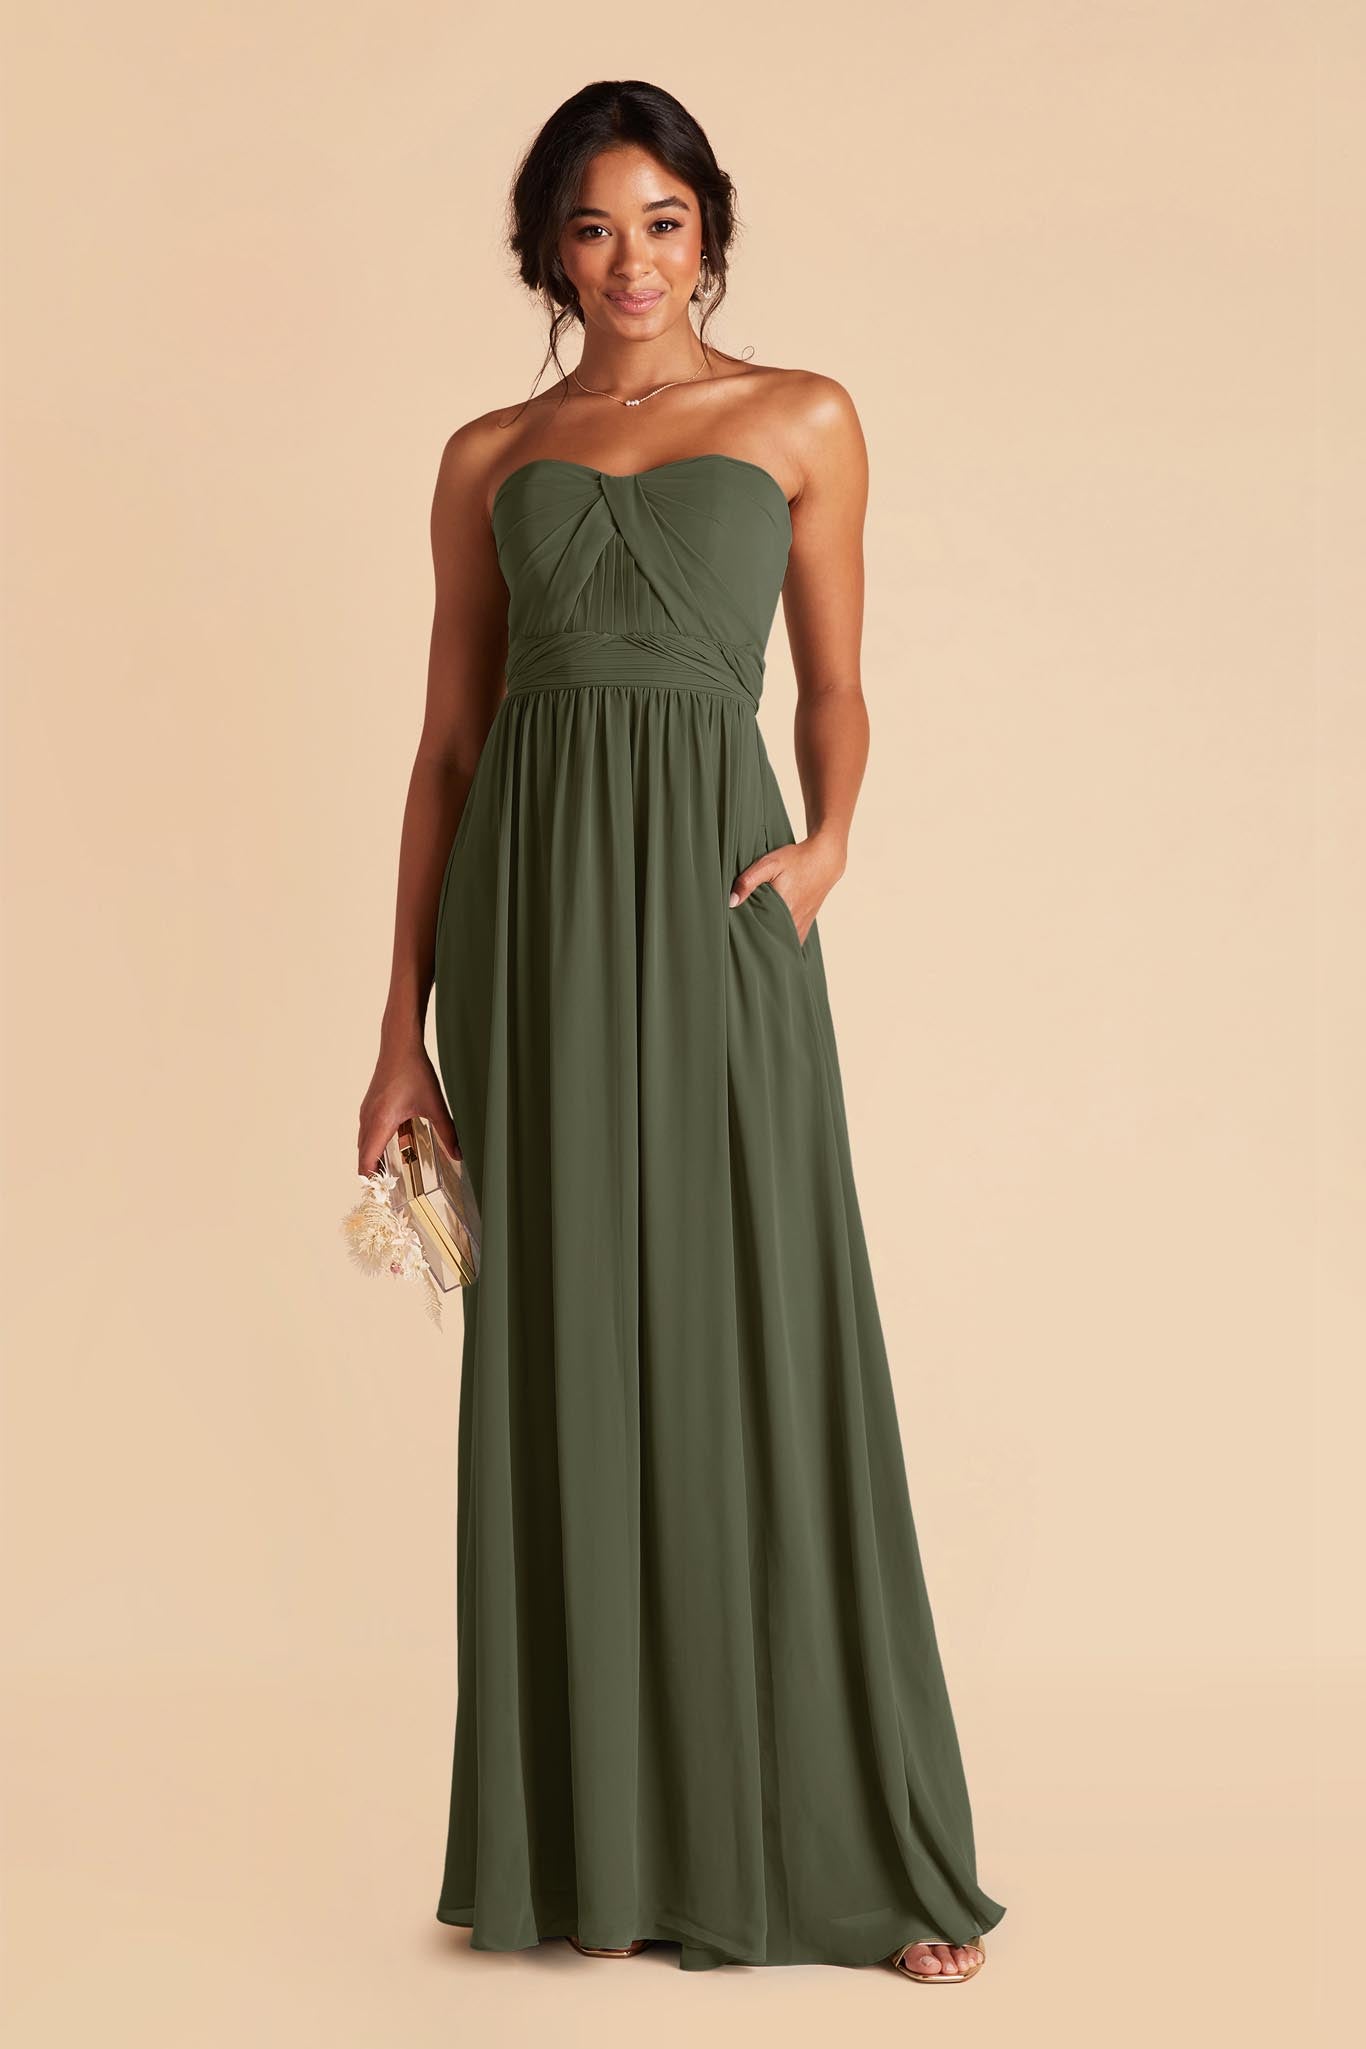 Grace Convertible Chiffon Bridesmaid Dress in Olive